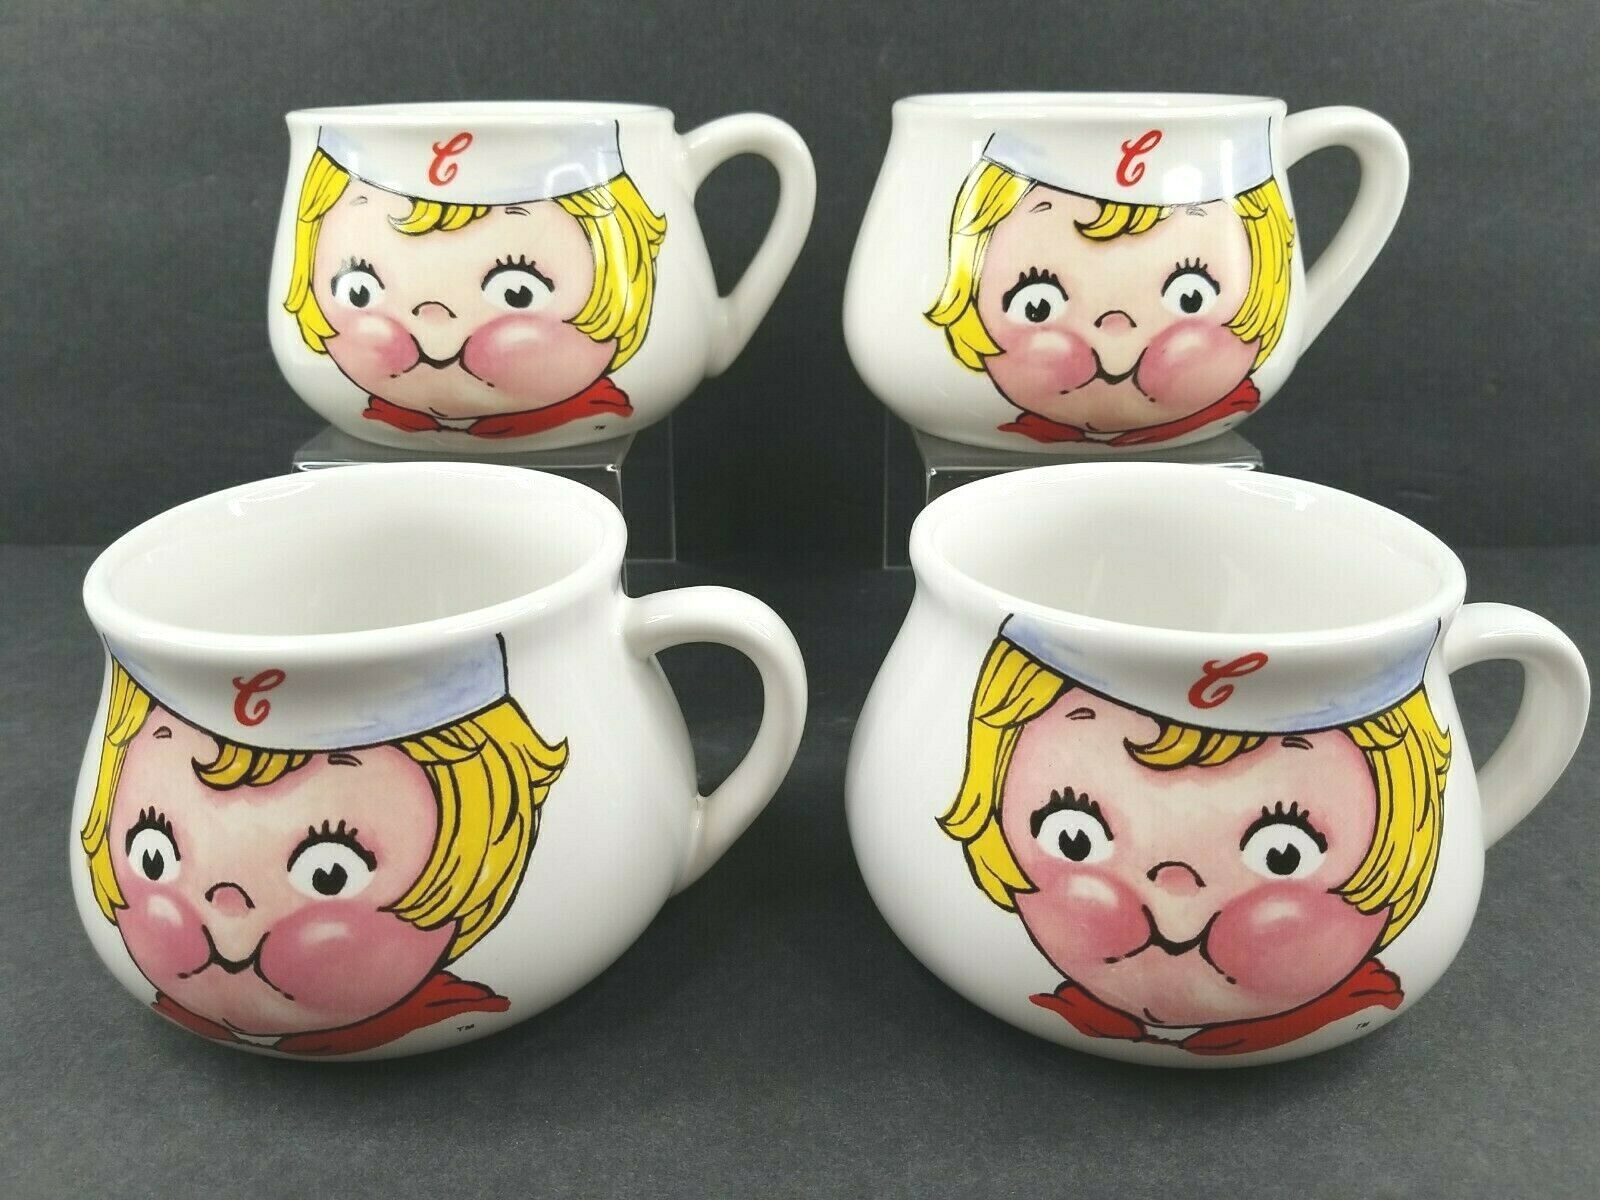 4 Campbell Kids Face Mugs Set Vintage Large Ceramic Handled Fun Cup Bowl HH 1998 - $49.17